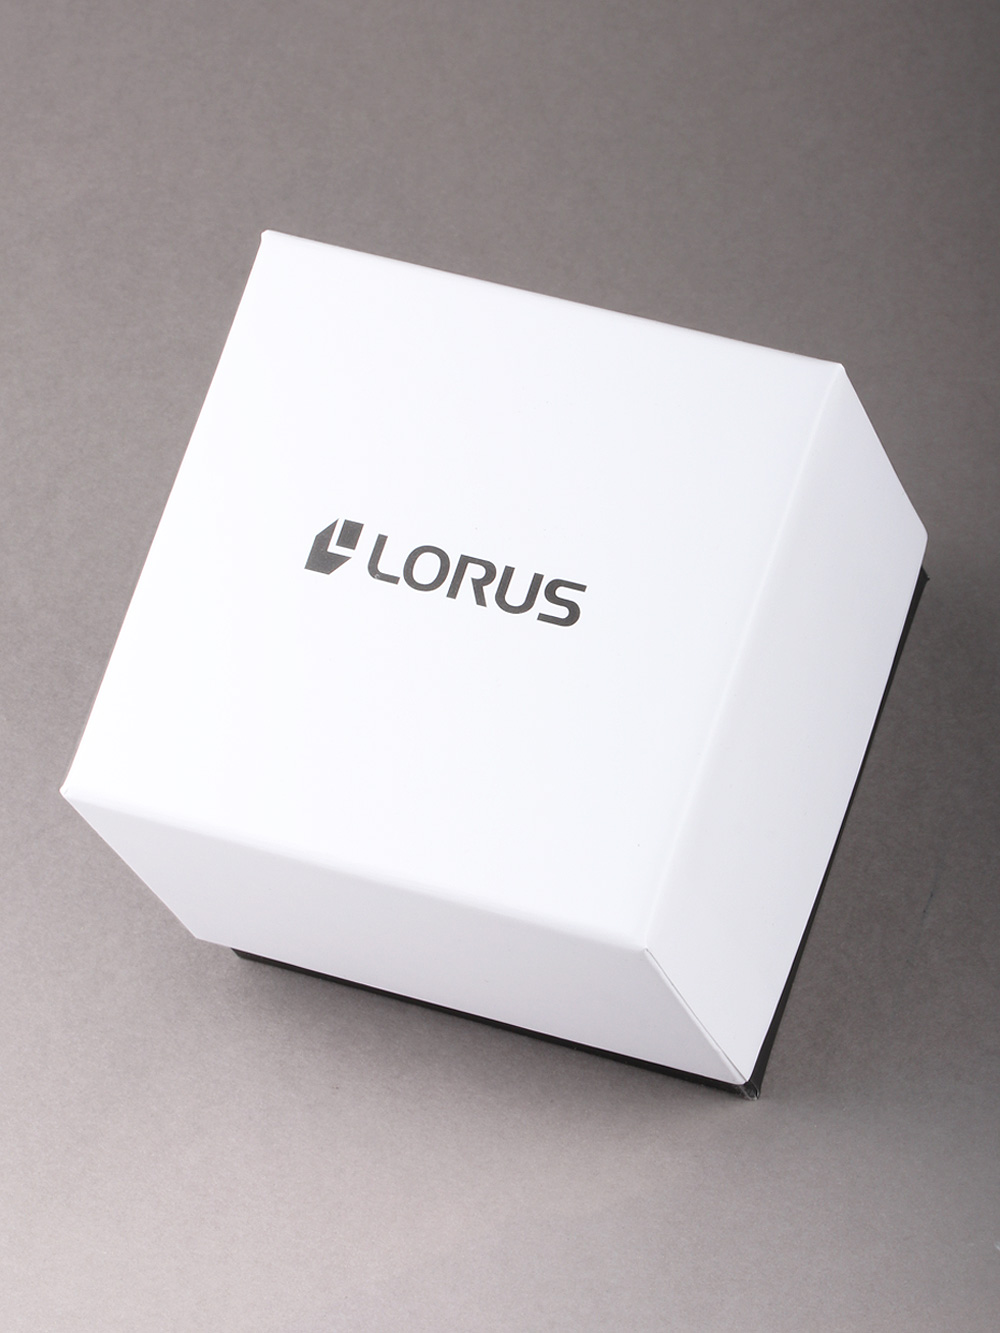 Lorus RL493AX9